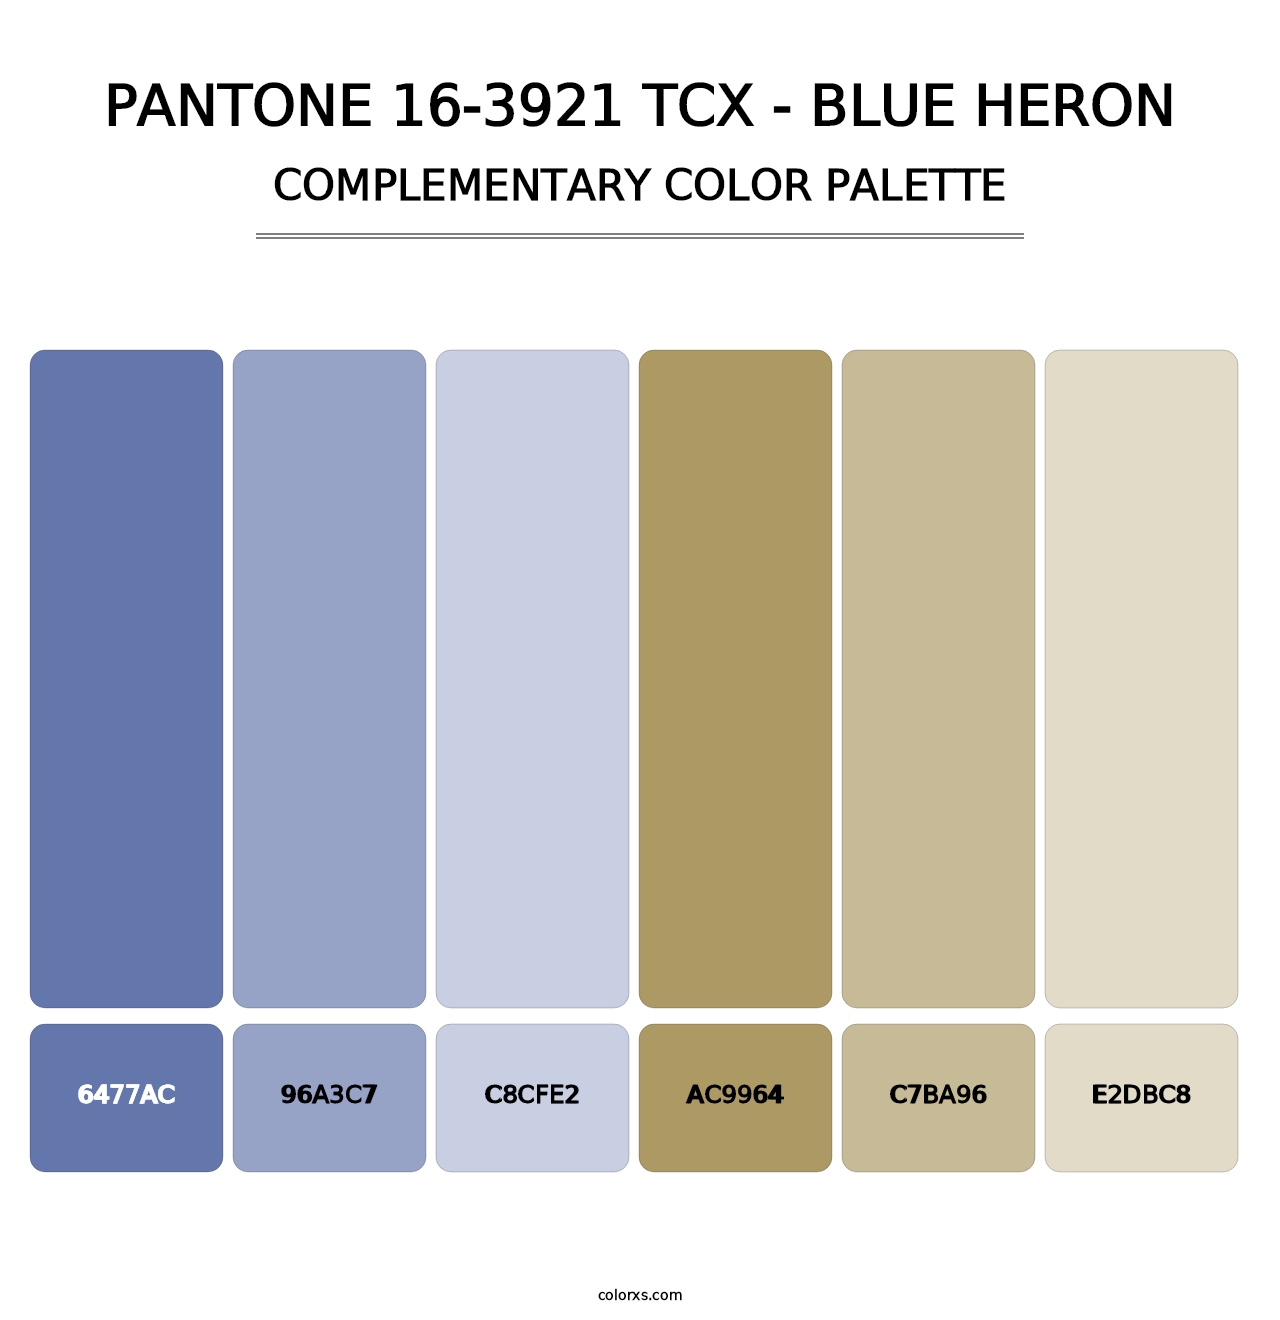 PANTONE 16-3921 TCX - Blue Heron - Complementary Color Palette